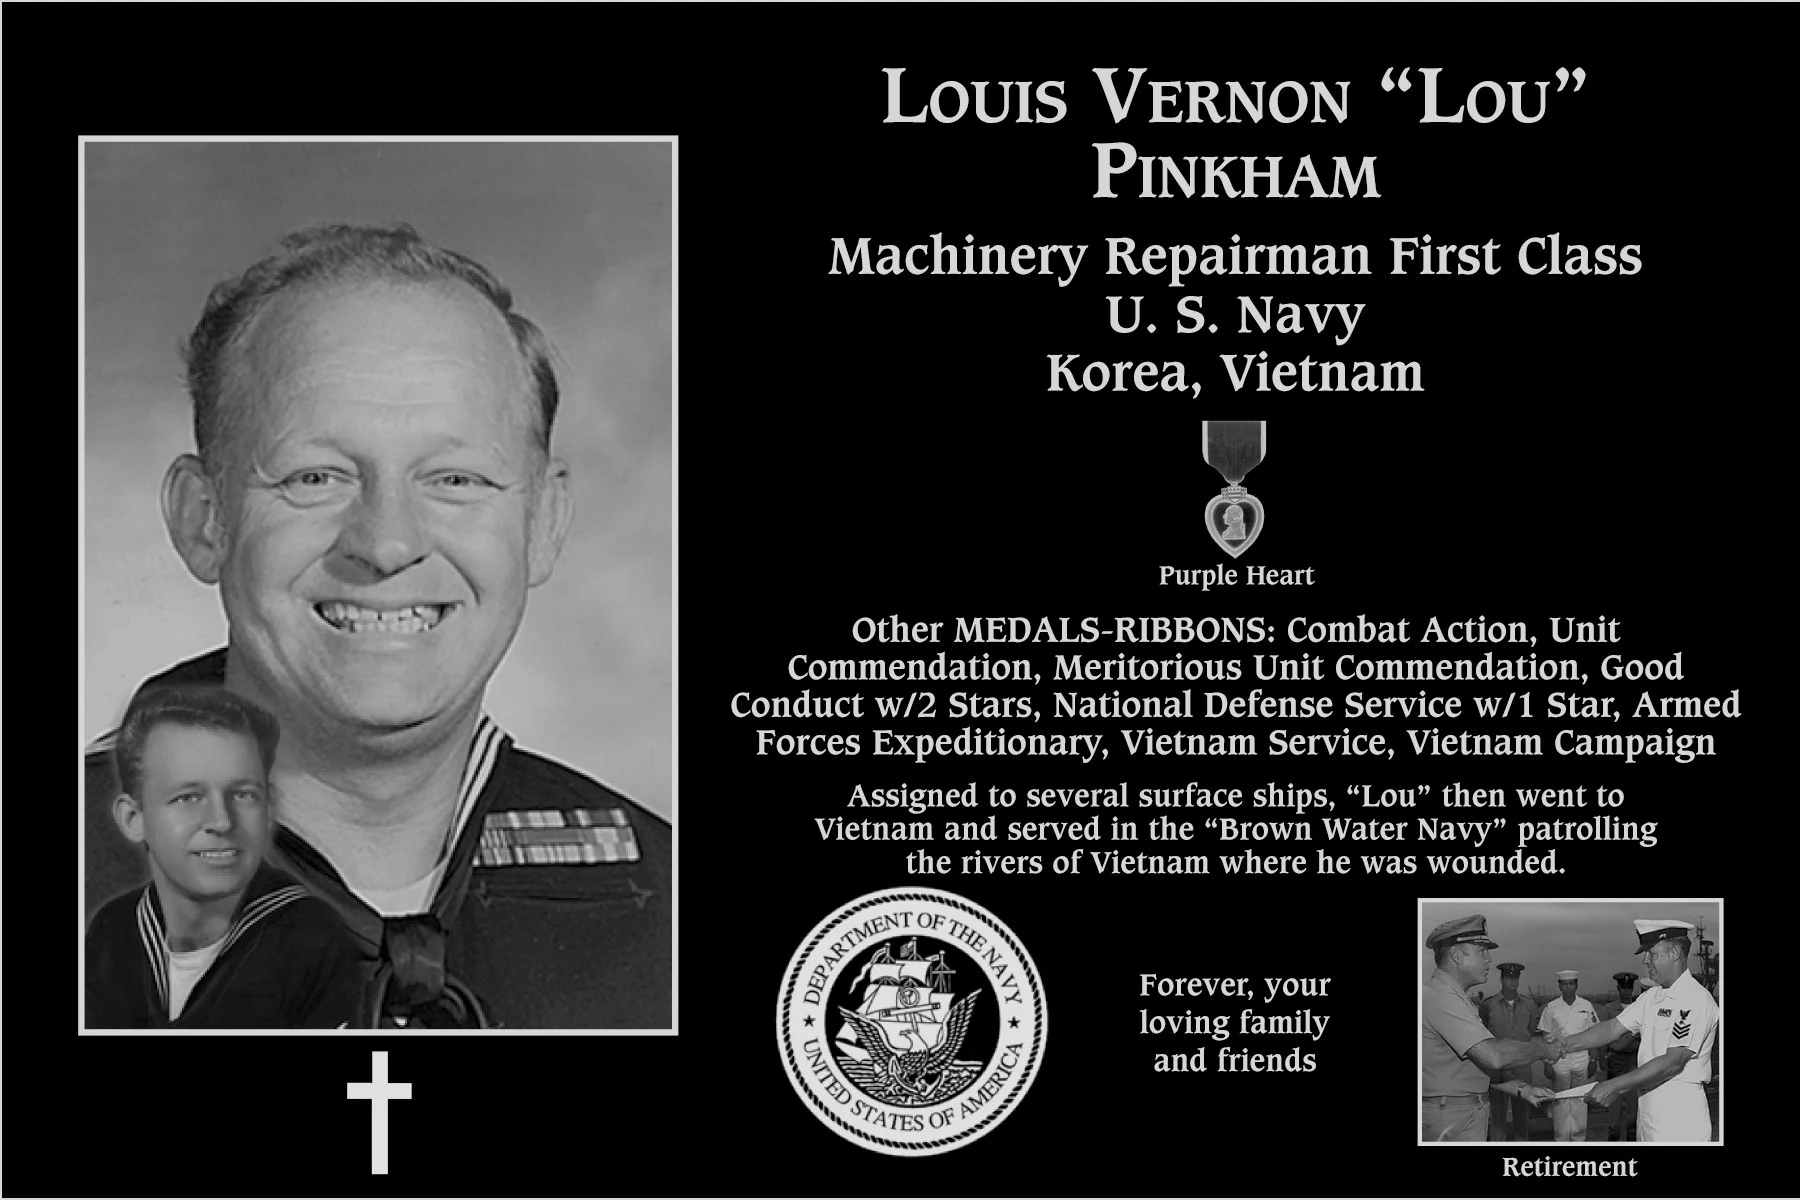 Louis Vernon “Lou” Pinkham